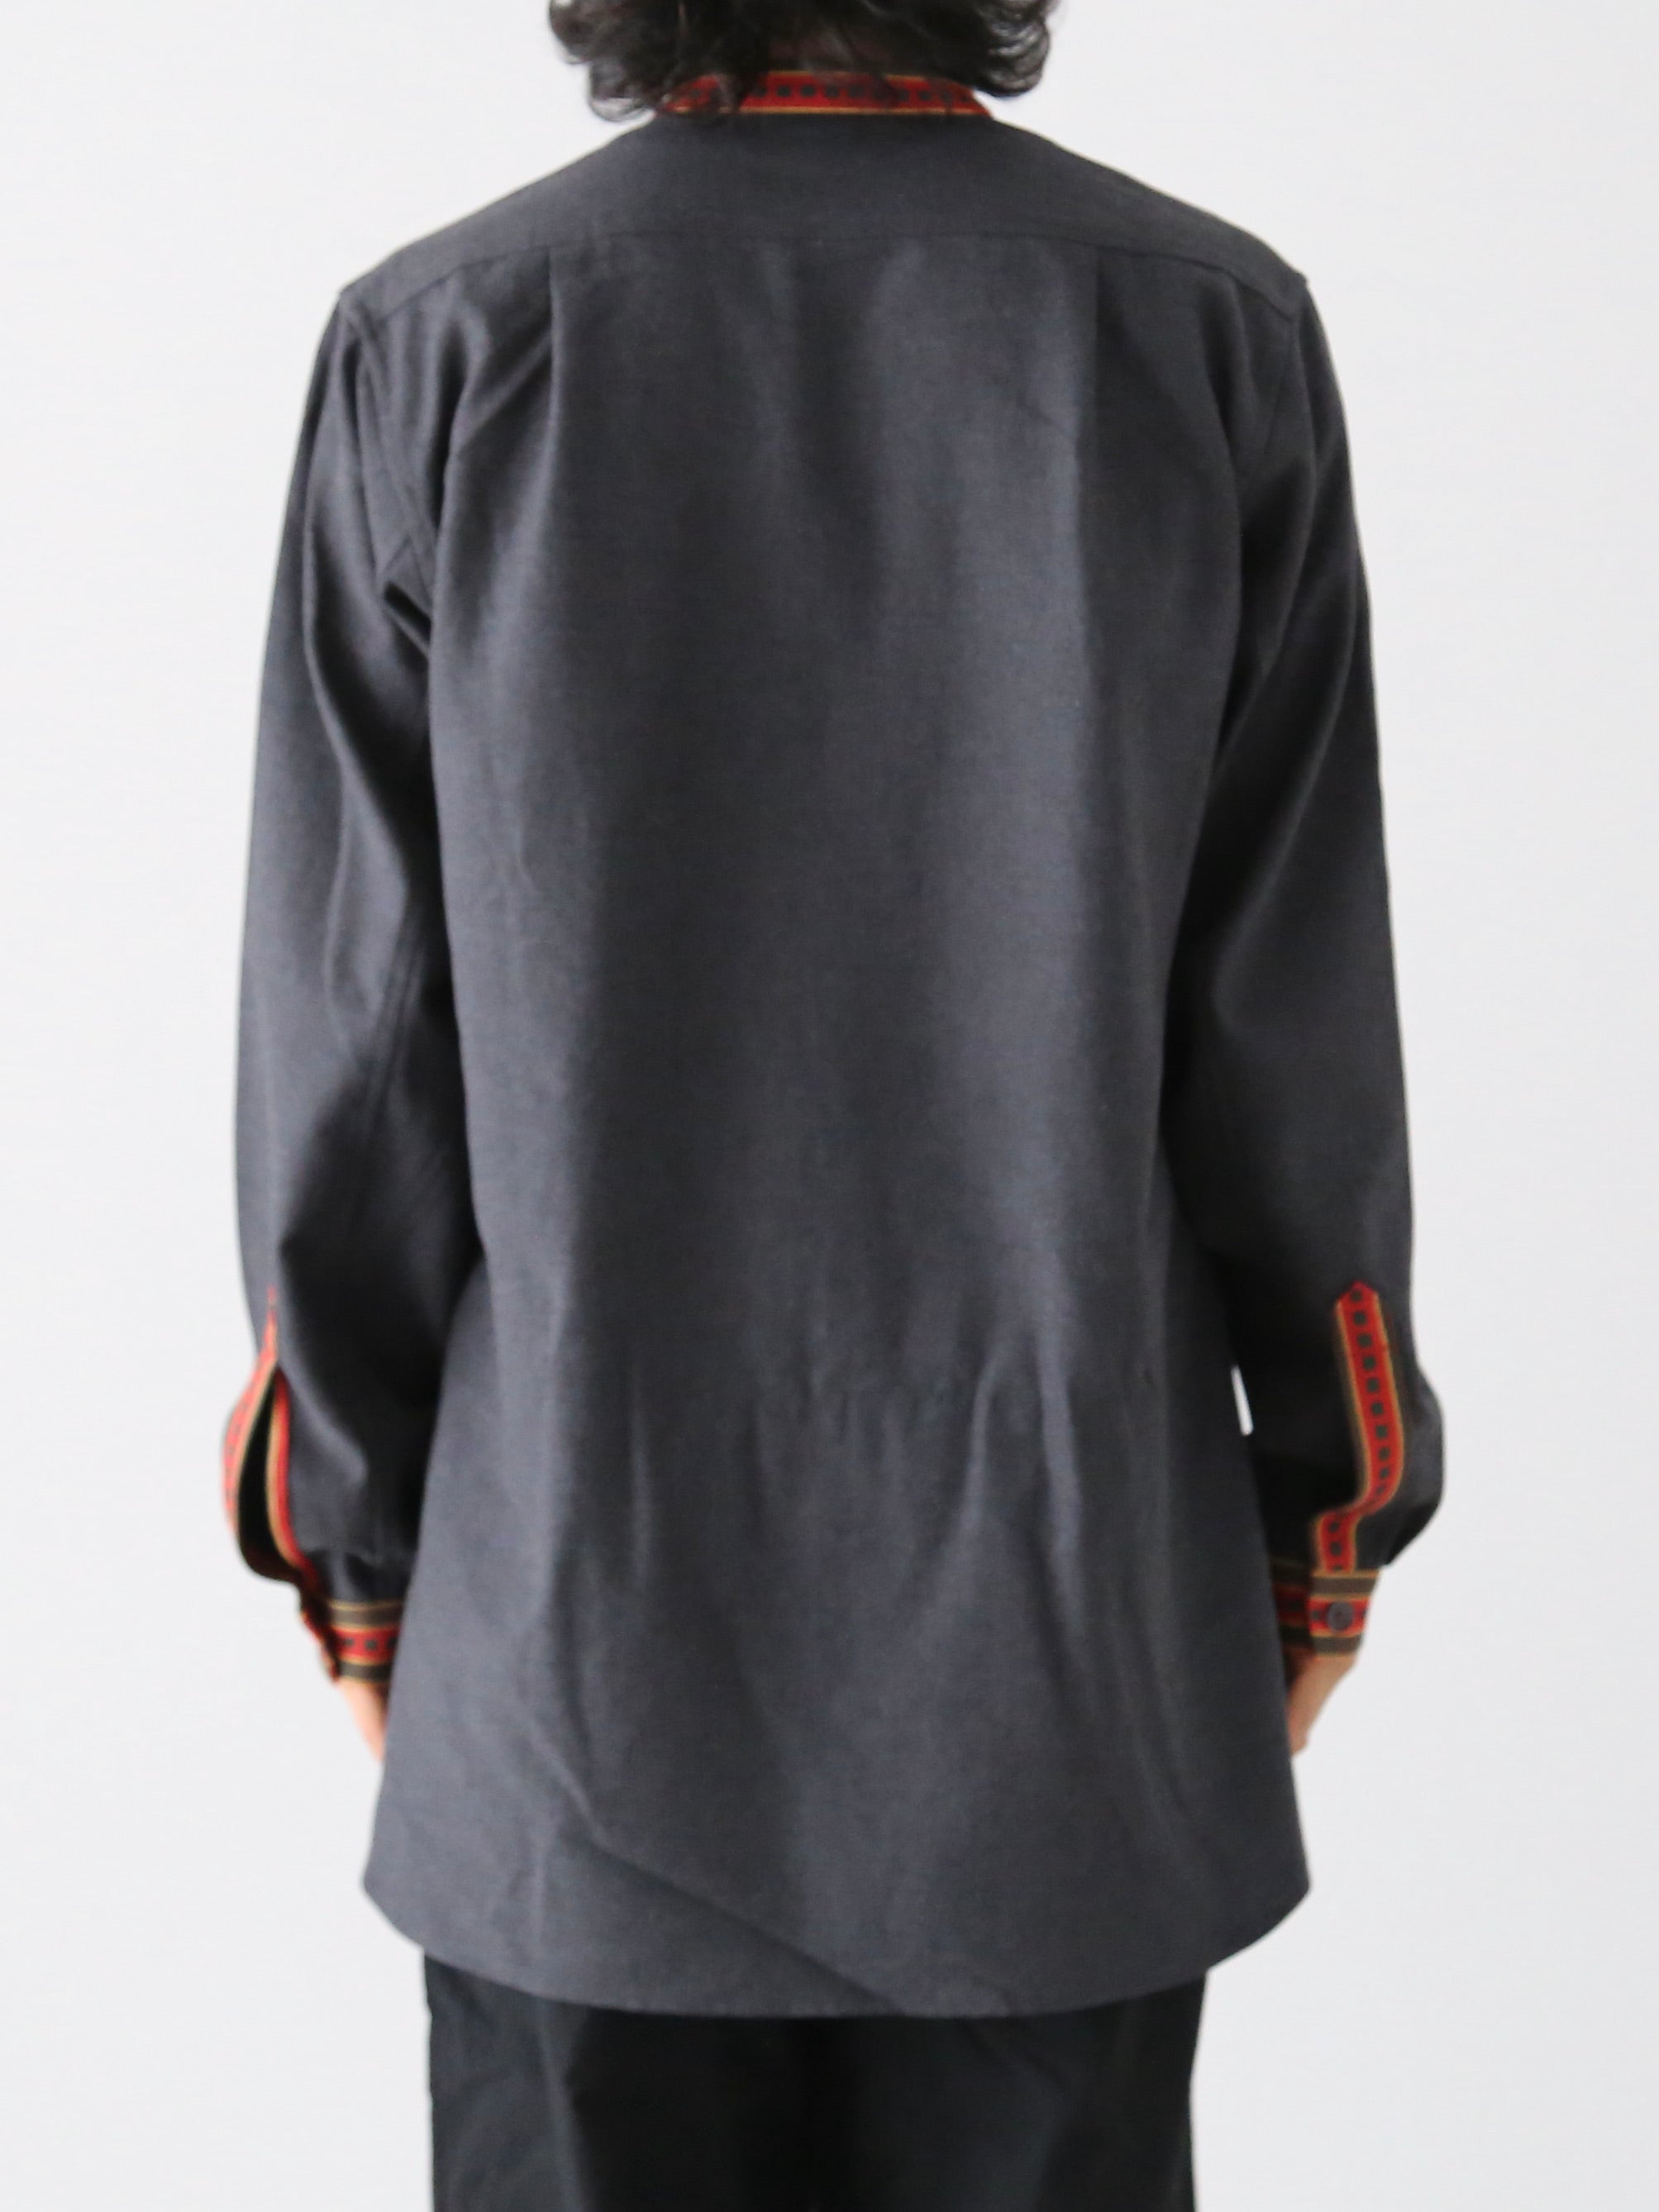 FRANK LEDER カジュアルシャツ S 黒x赤x白(総柄)